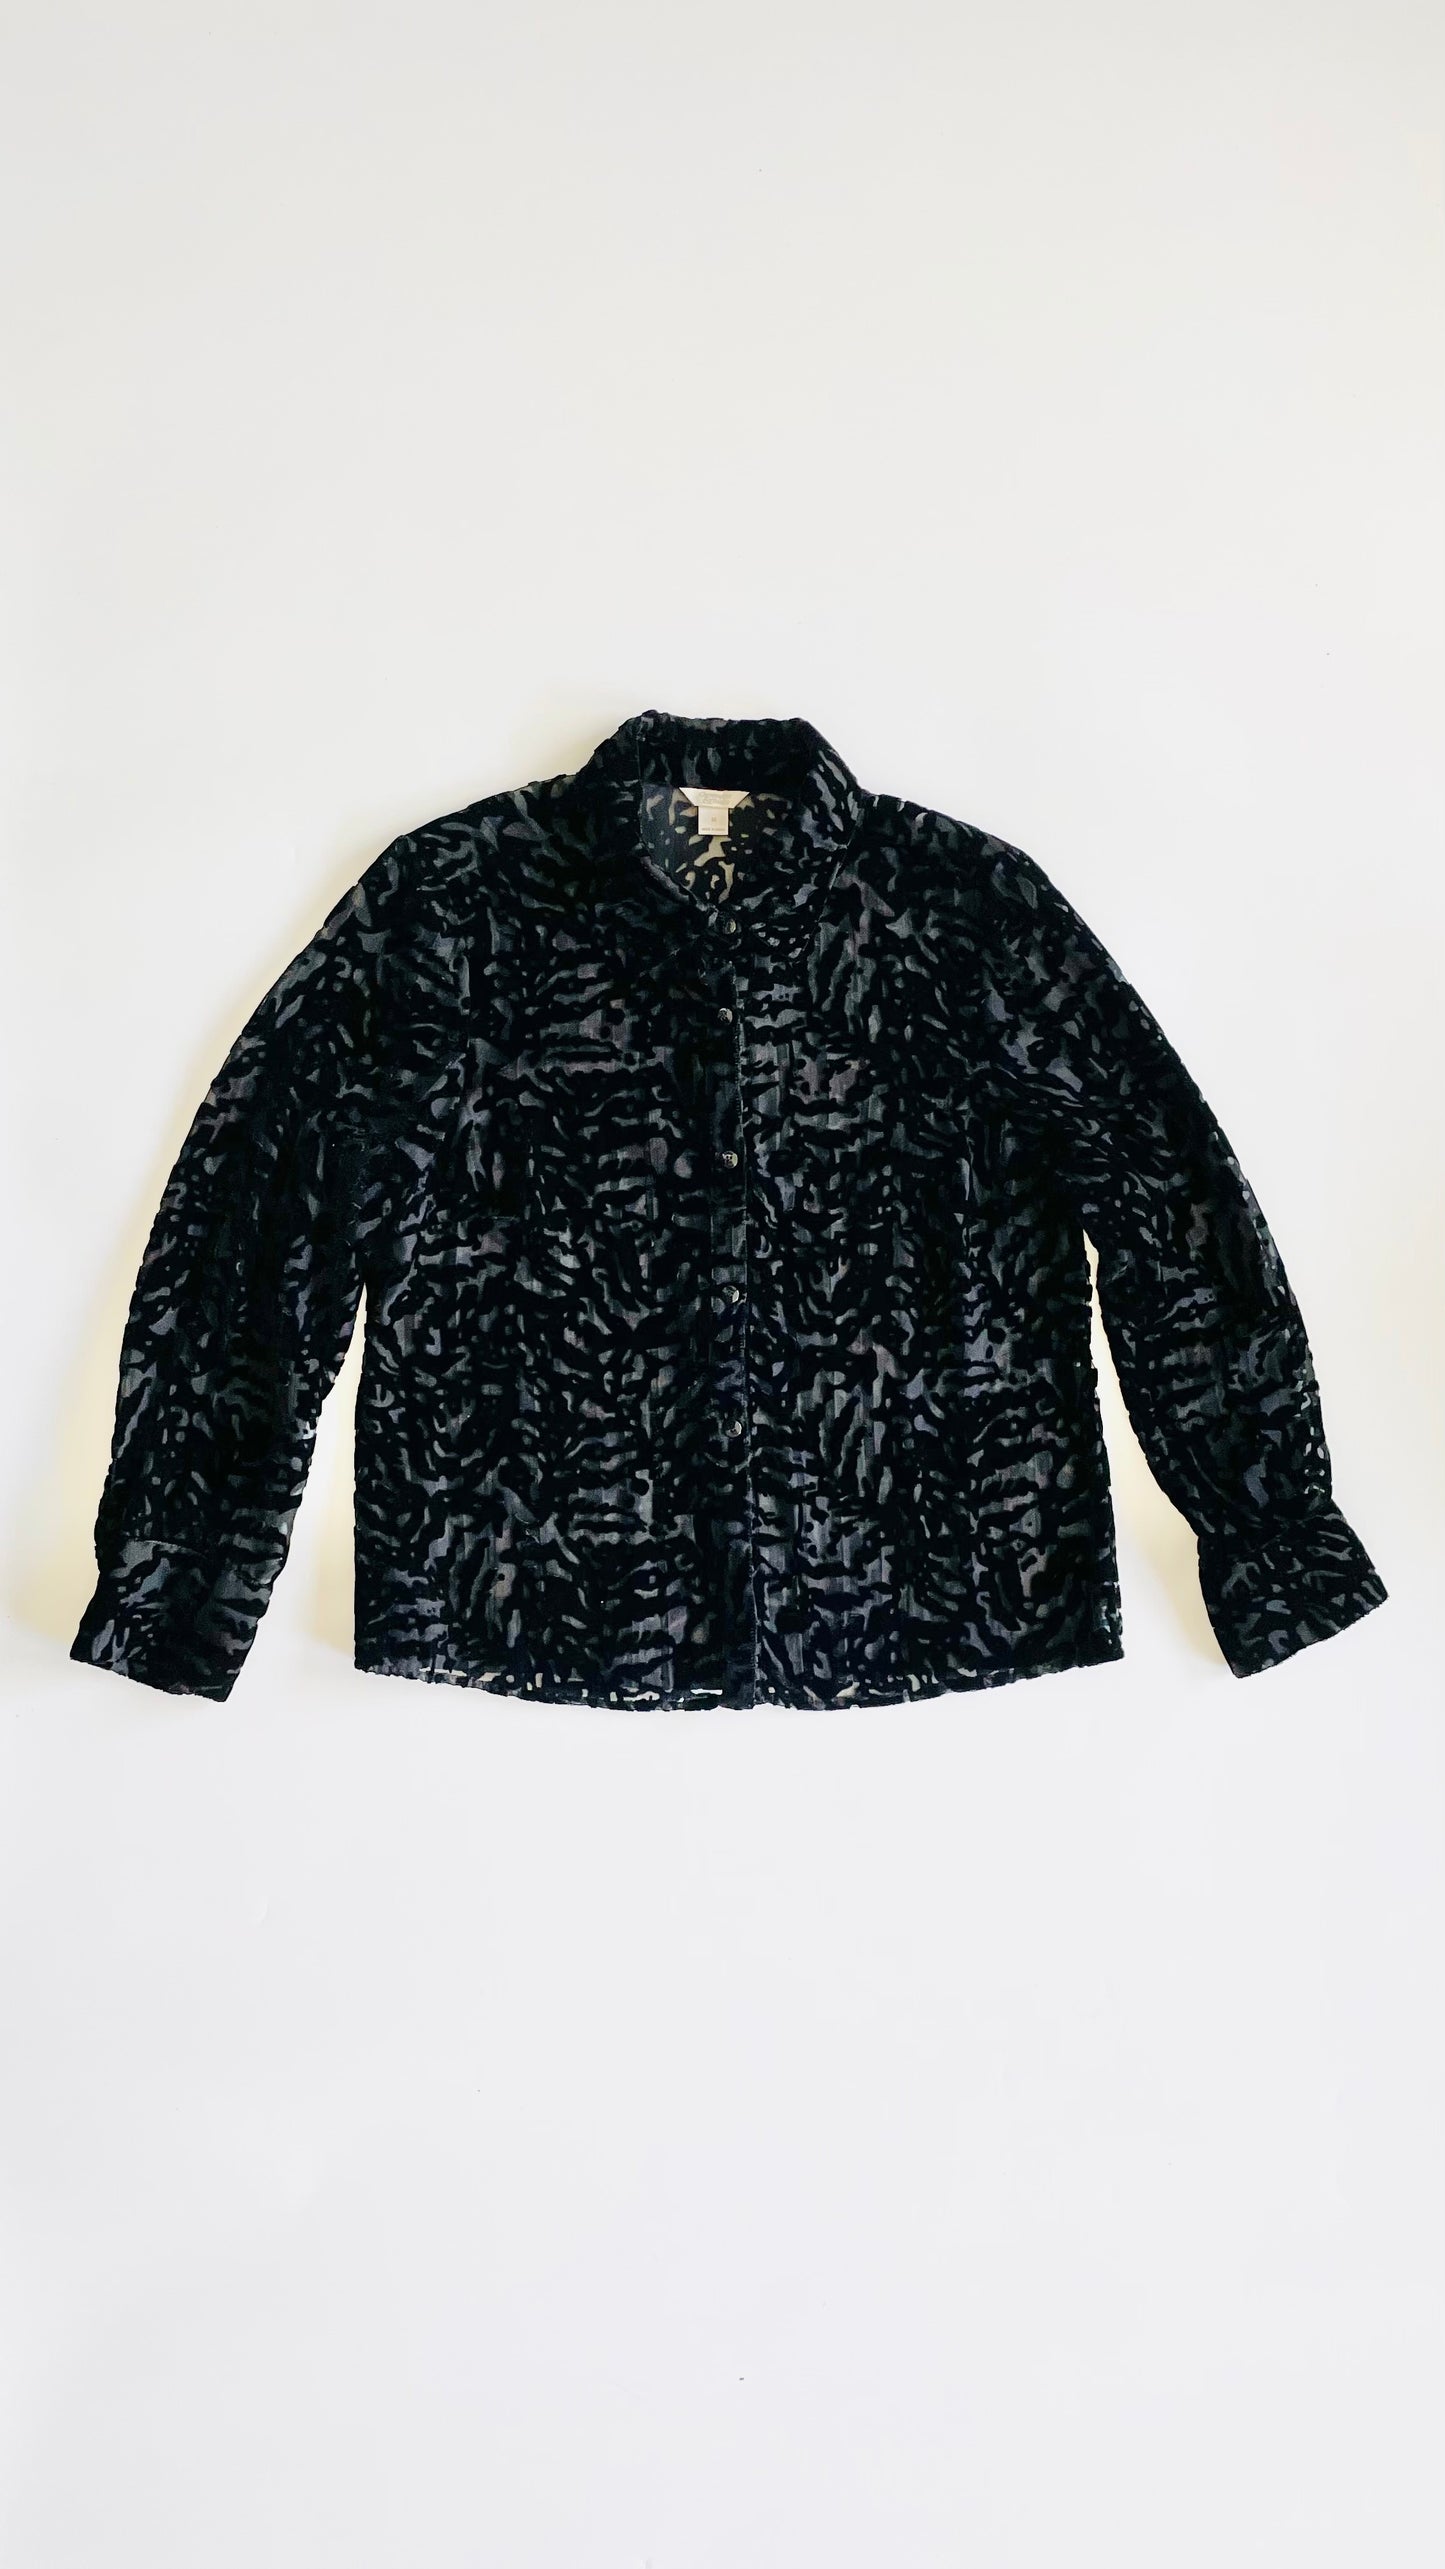 Vintage 90s black abstract zebra velvet burnout button up shirt - Size M